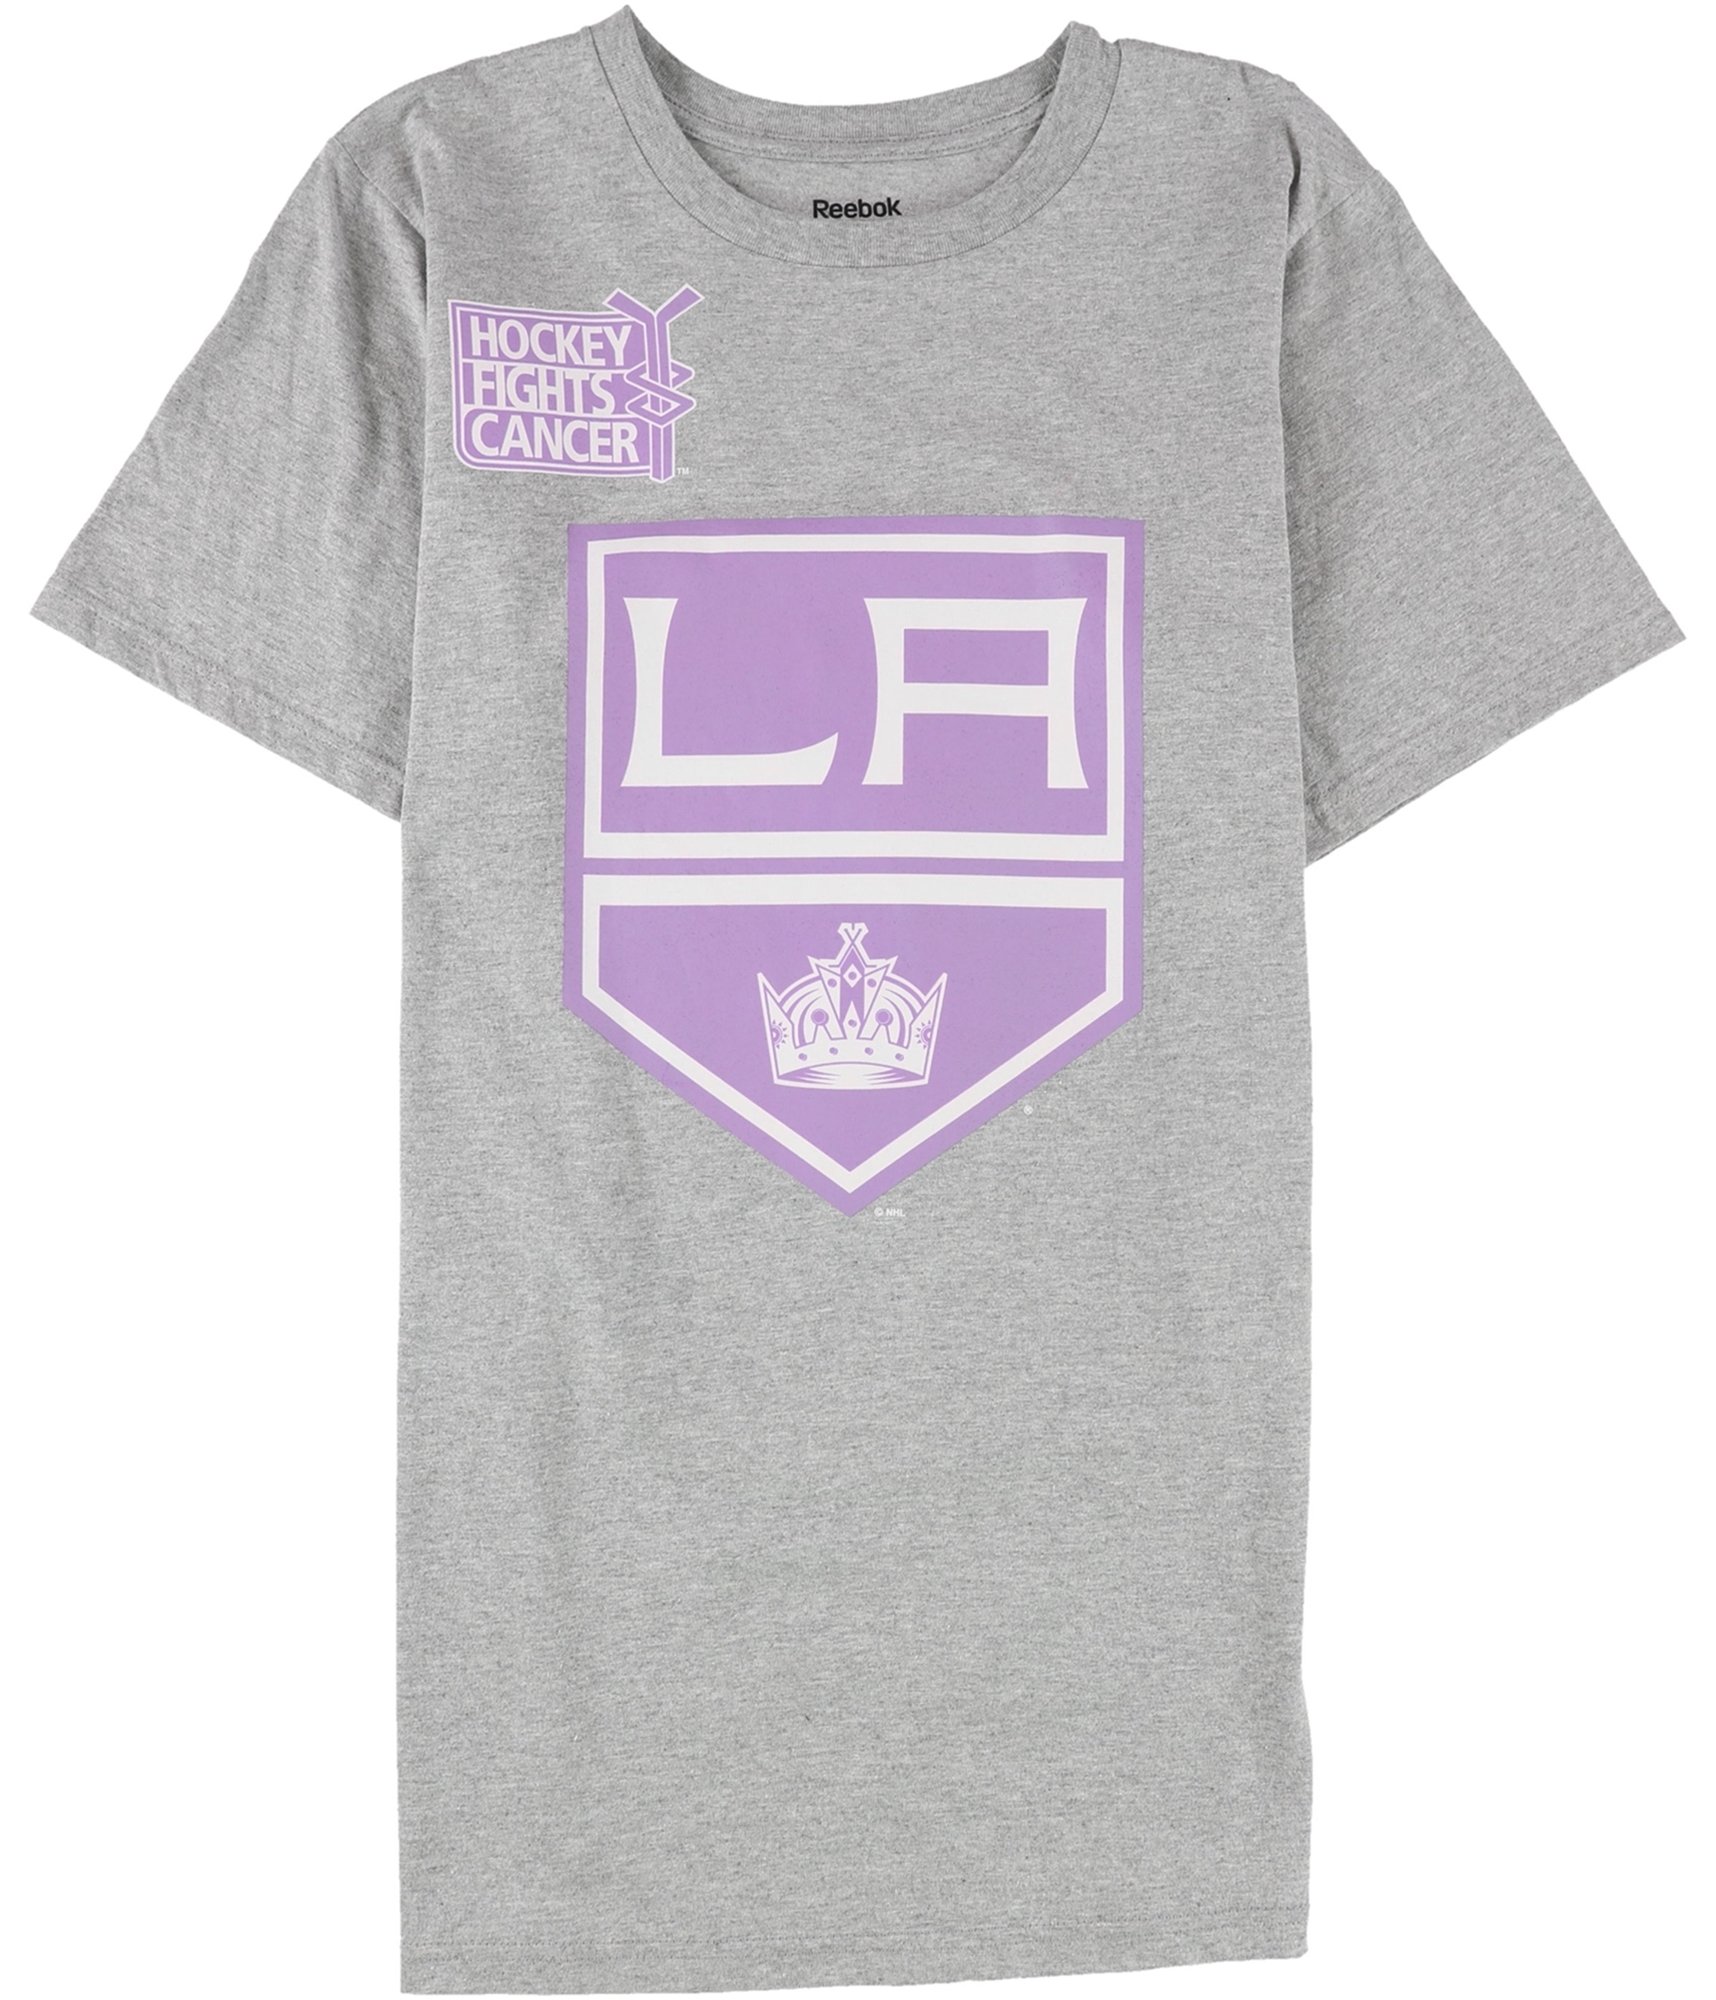 Reebok Mens Hockey Fights Cancer La Kings Graphic T-Shirt